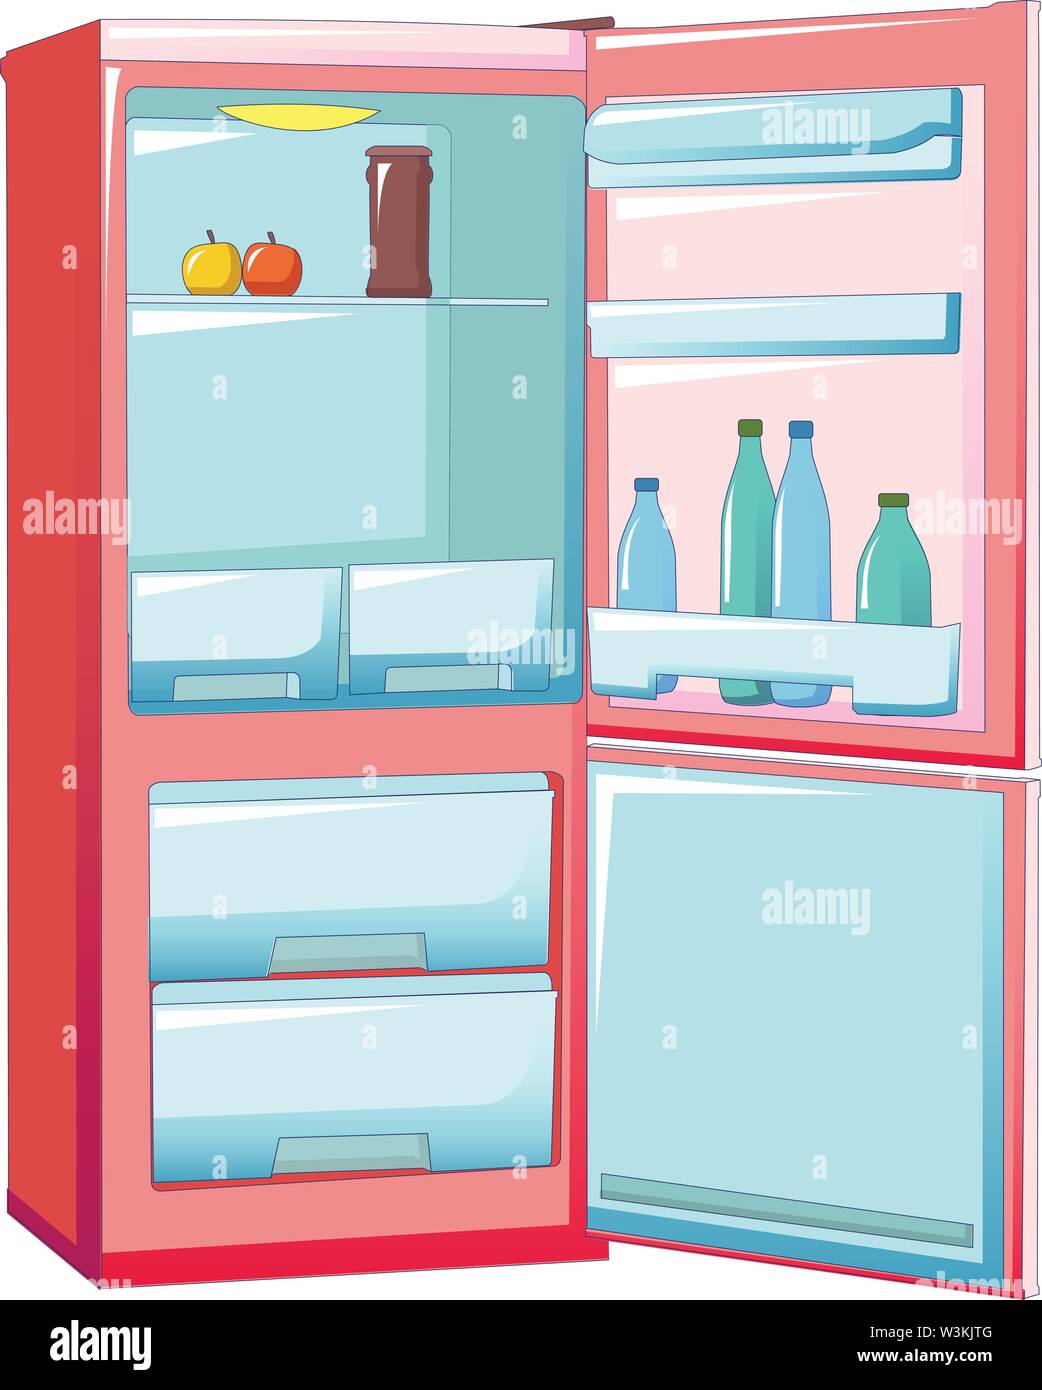 Half empty fridge icon, cartoon style Stock Vector